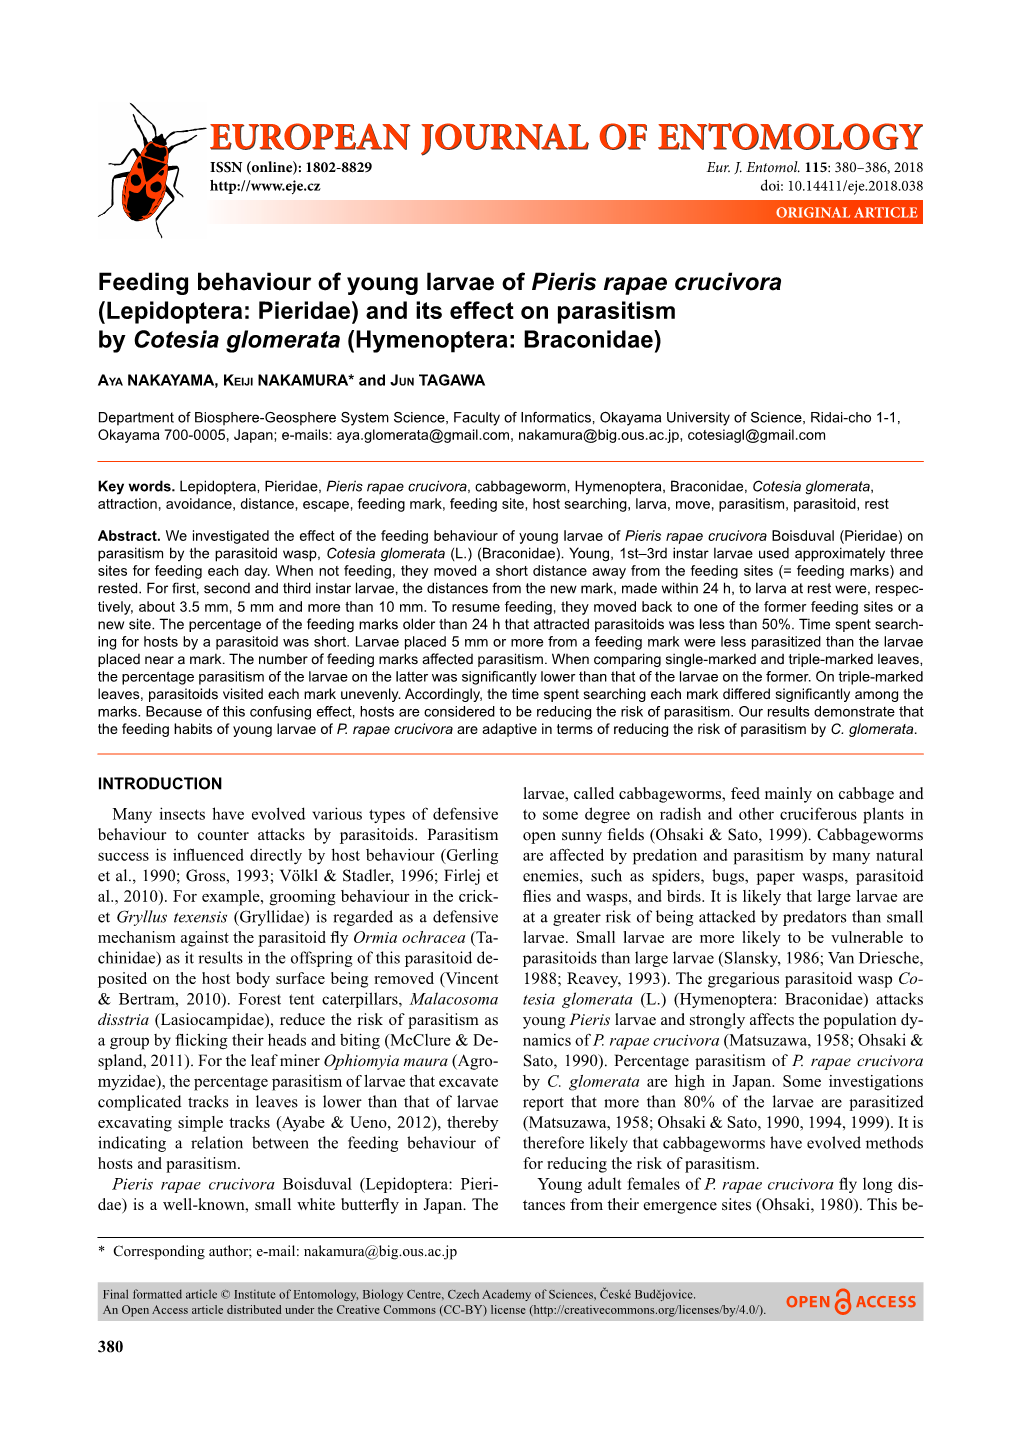 Feeding Behaviour of Young Larvae of Pieris Rapae Crucivora (Lepidoptera: Pieridae) and Its Effect on Parasitism by Cotesia Glomerata (Hymenoptera: Braconidae)